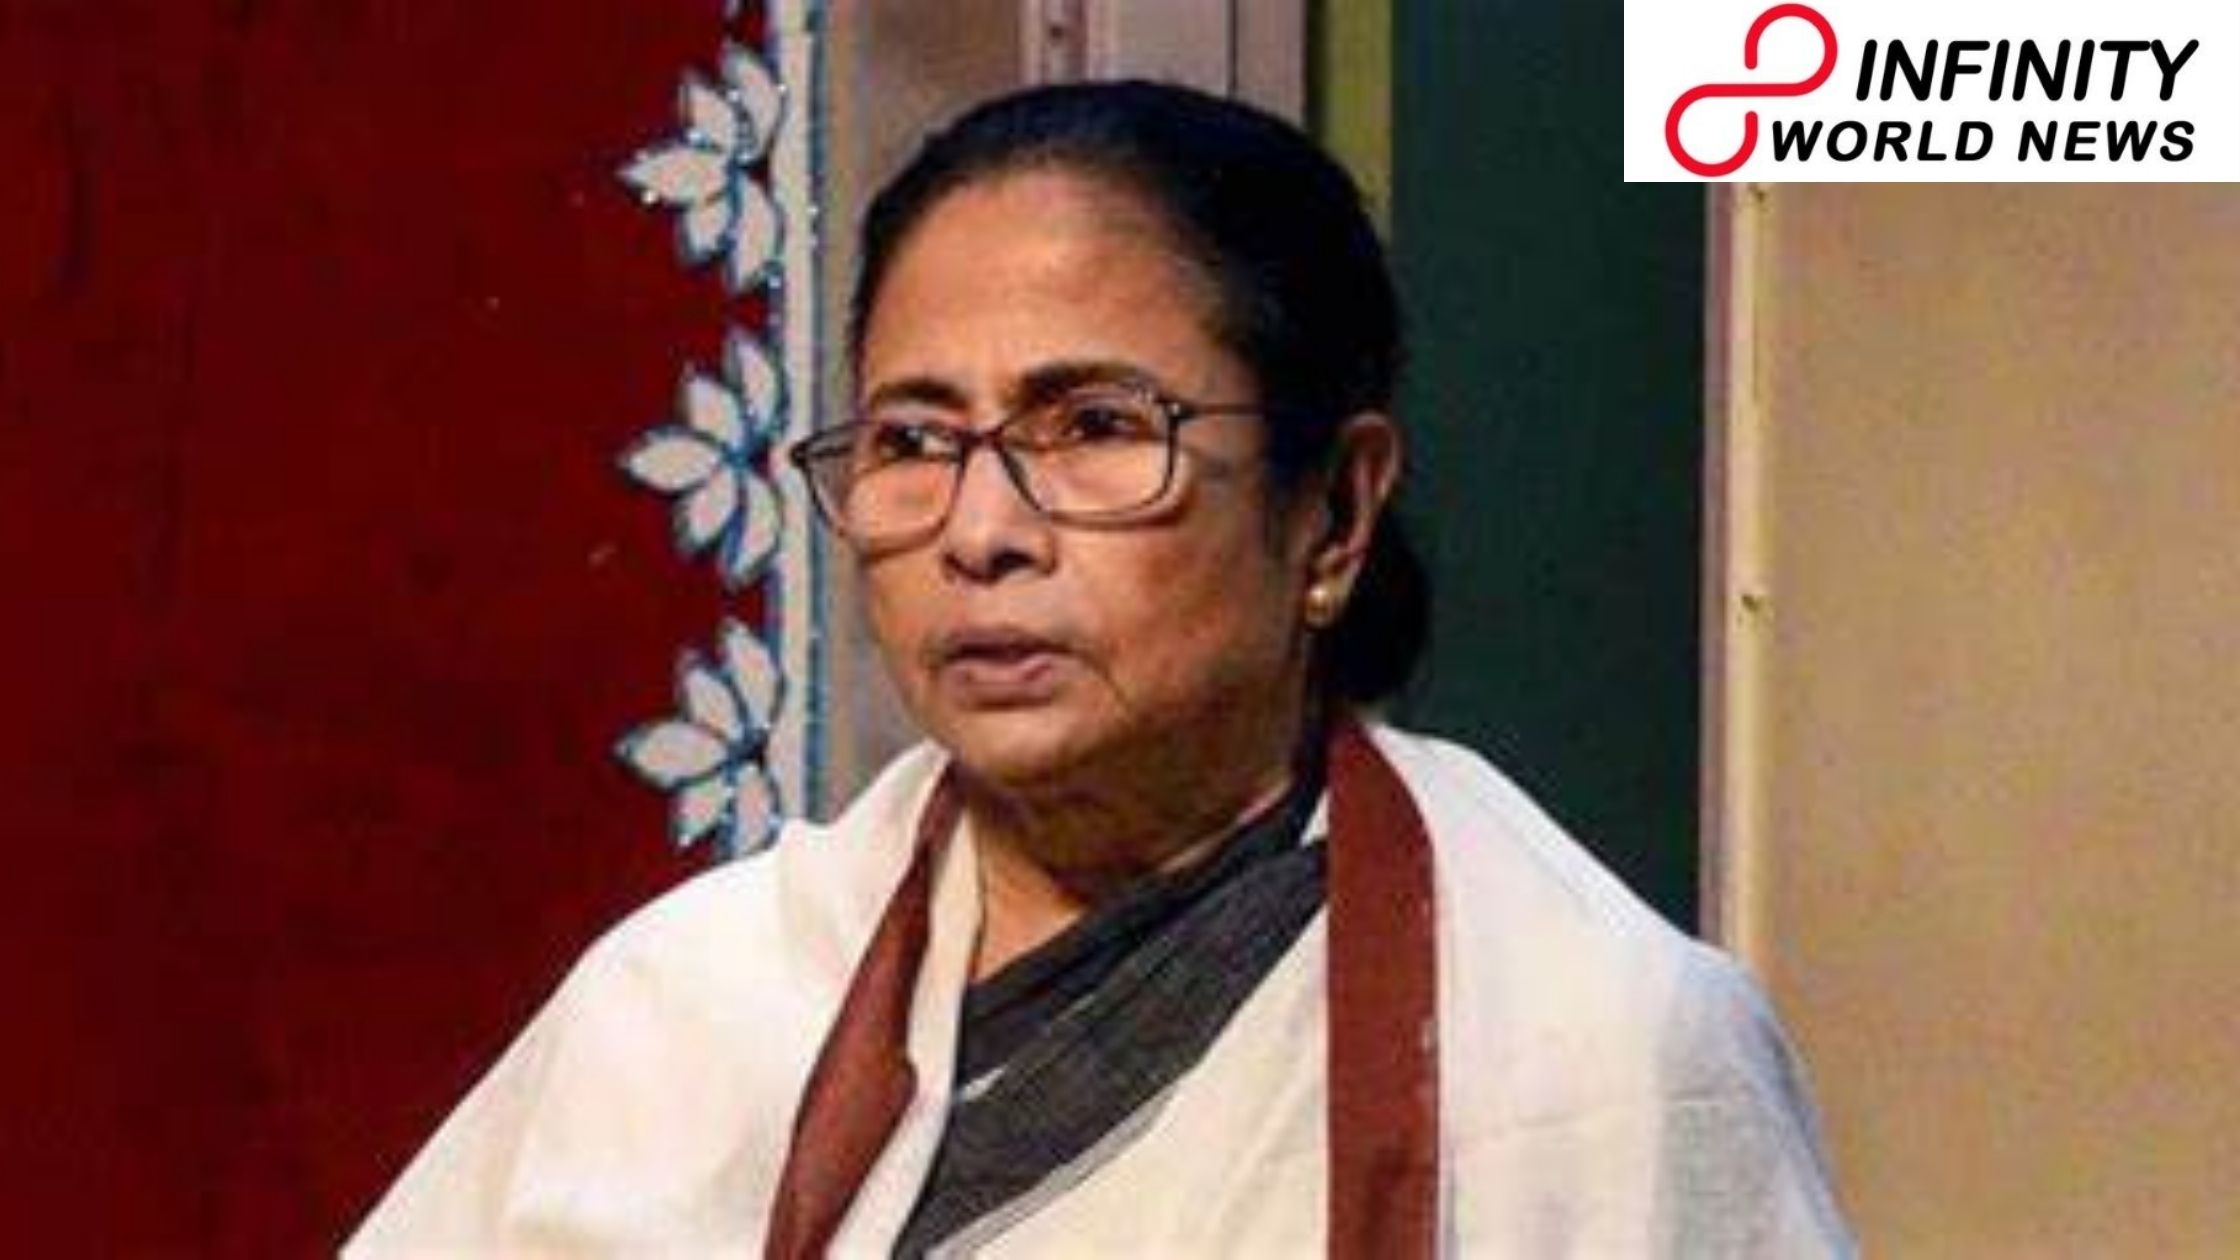 Mamata Banerjee harmed in Nandigram: West Bengal CM arrives at SKMM medical clinic